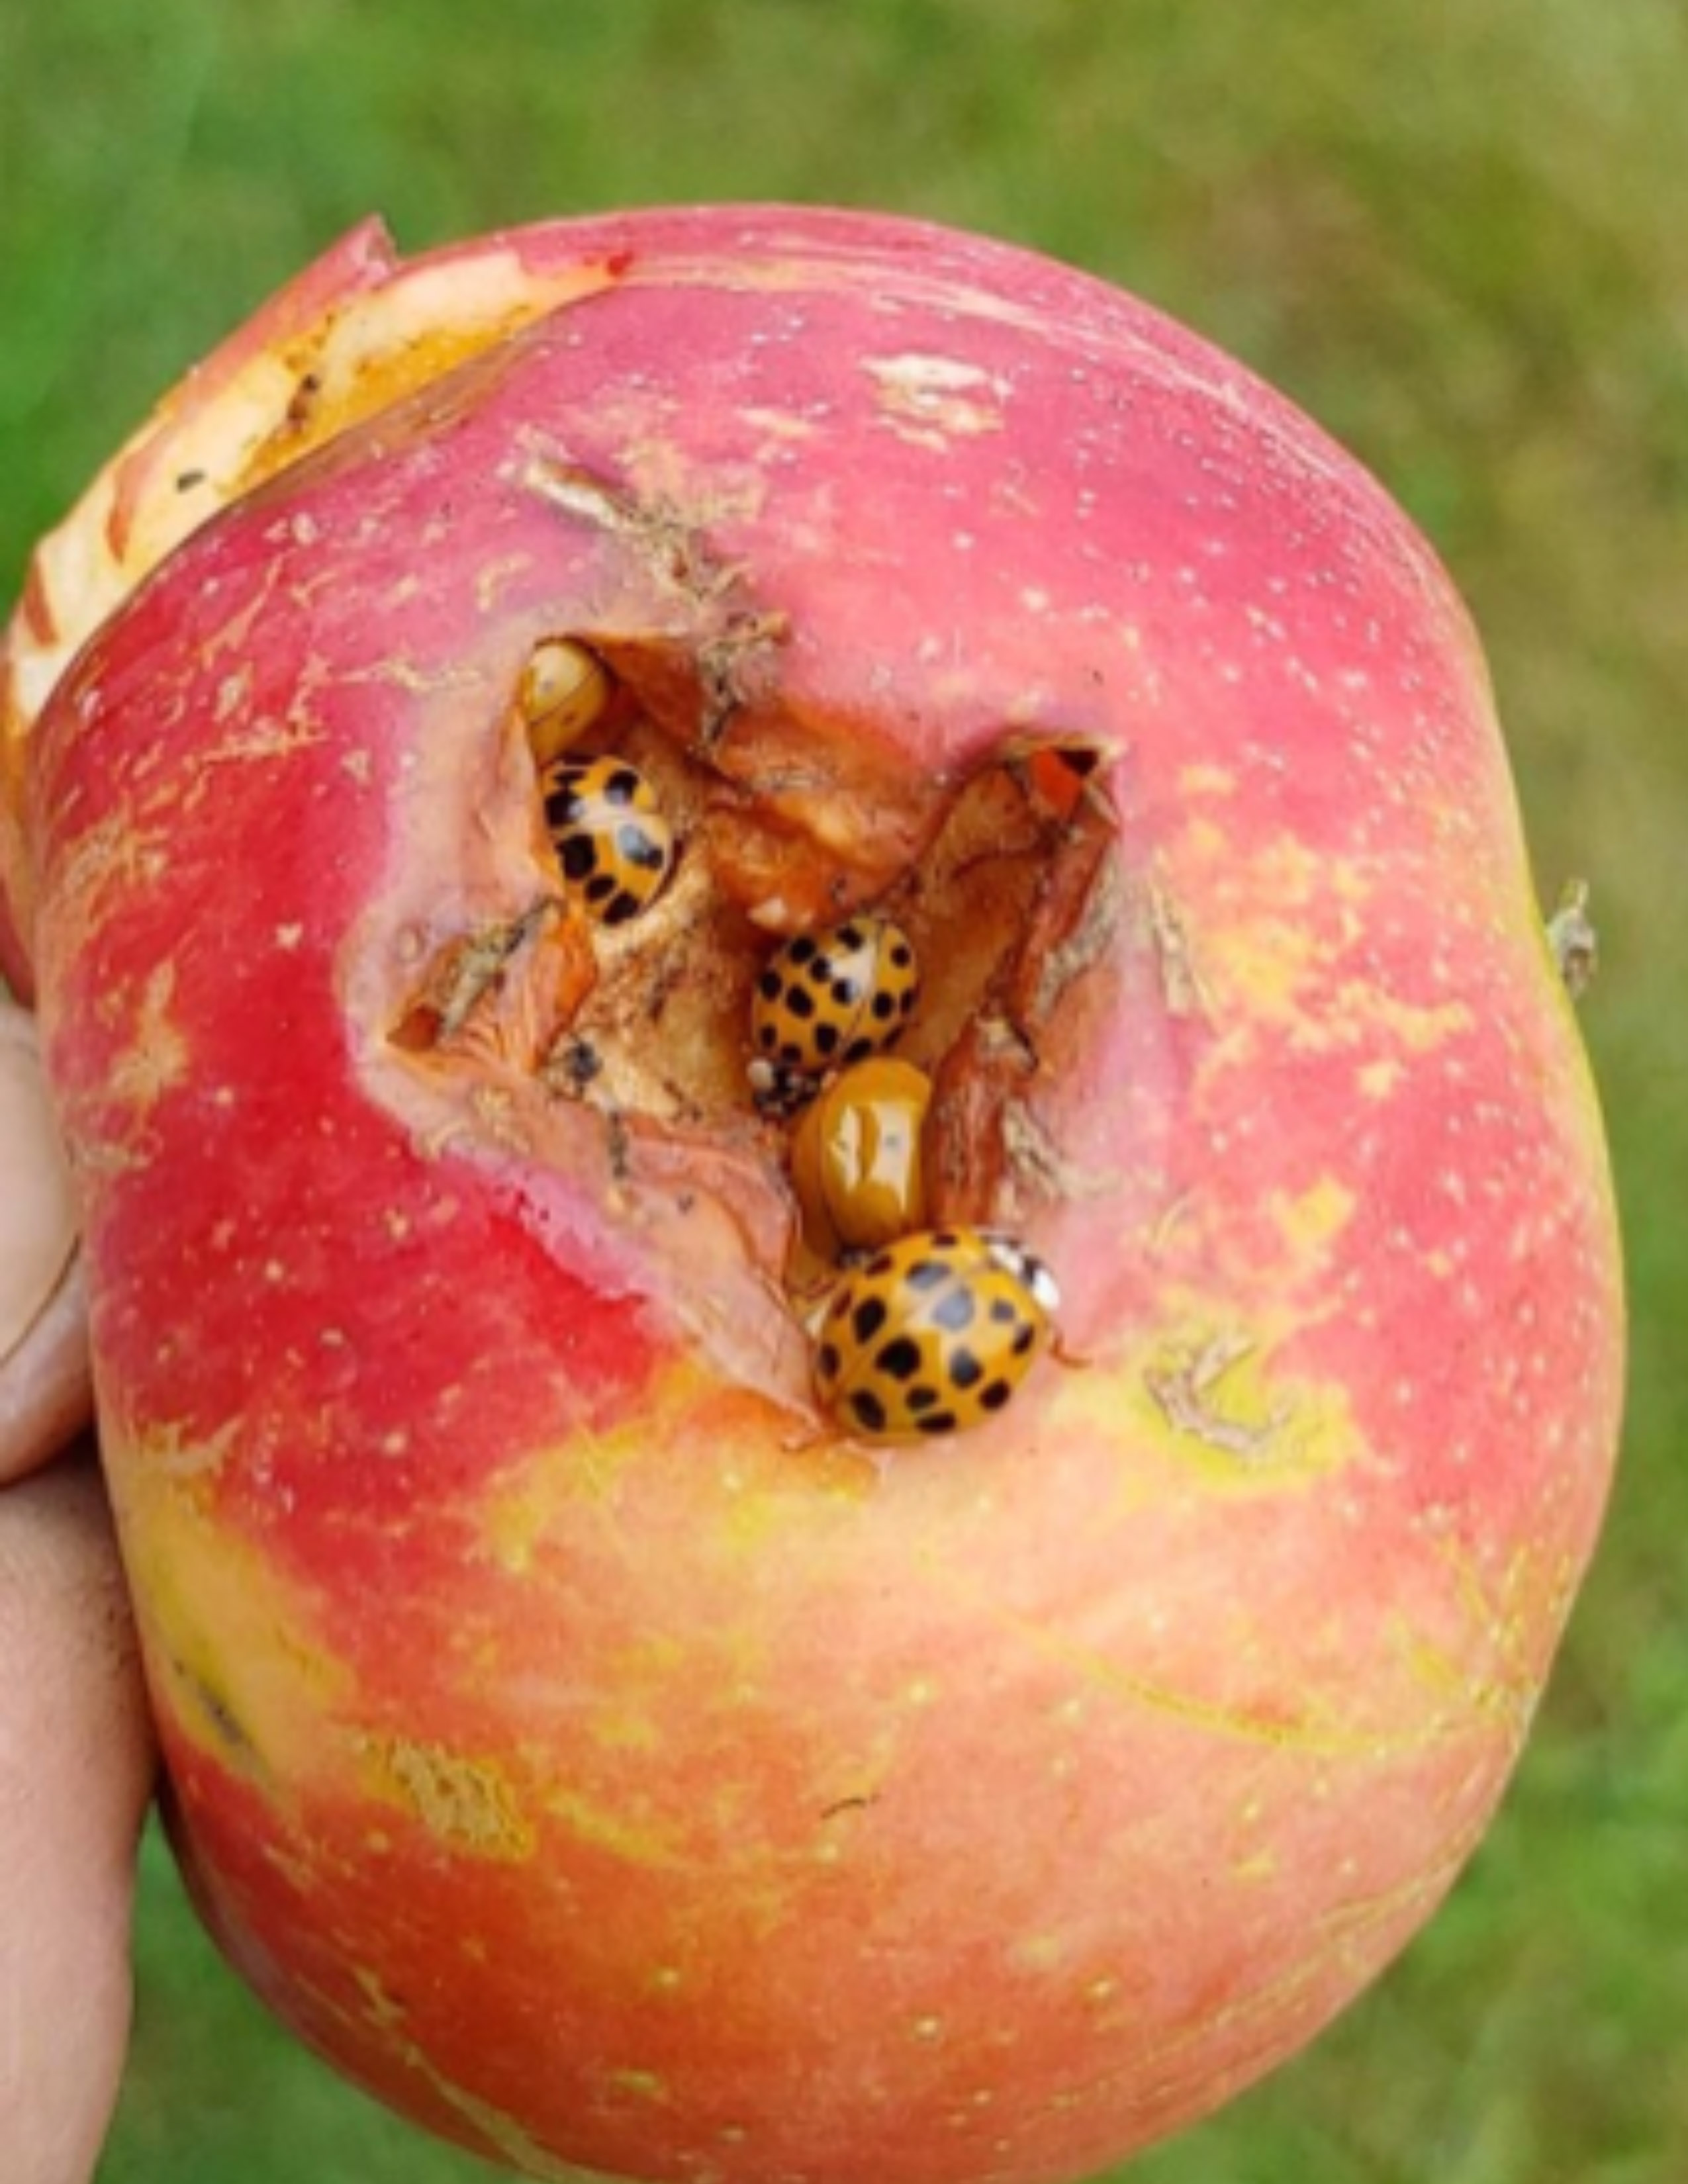 Orange beetles with black spots feeding under the skin of an apple.